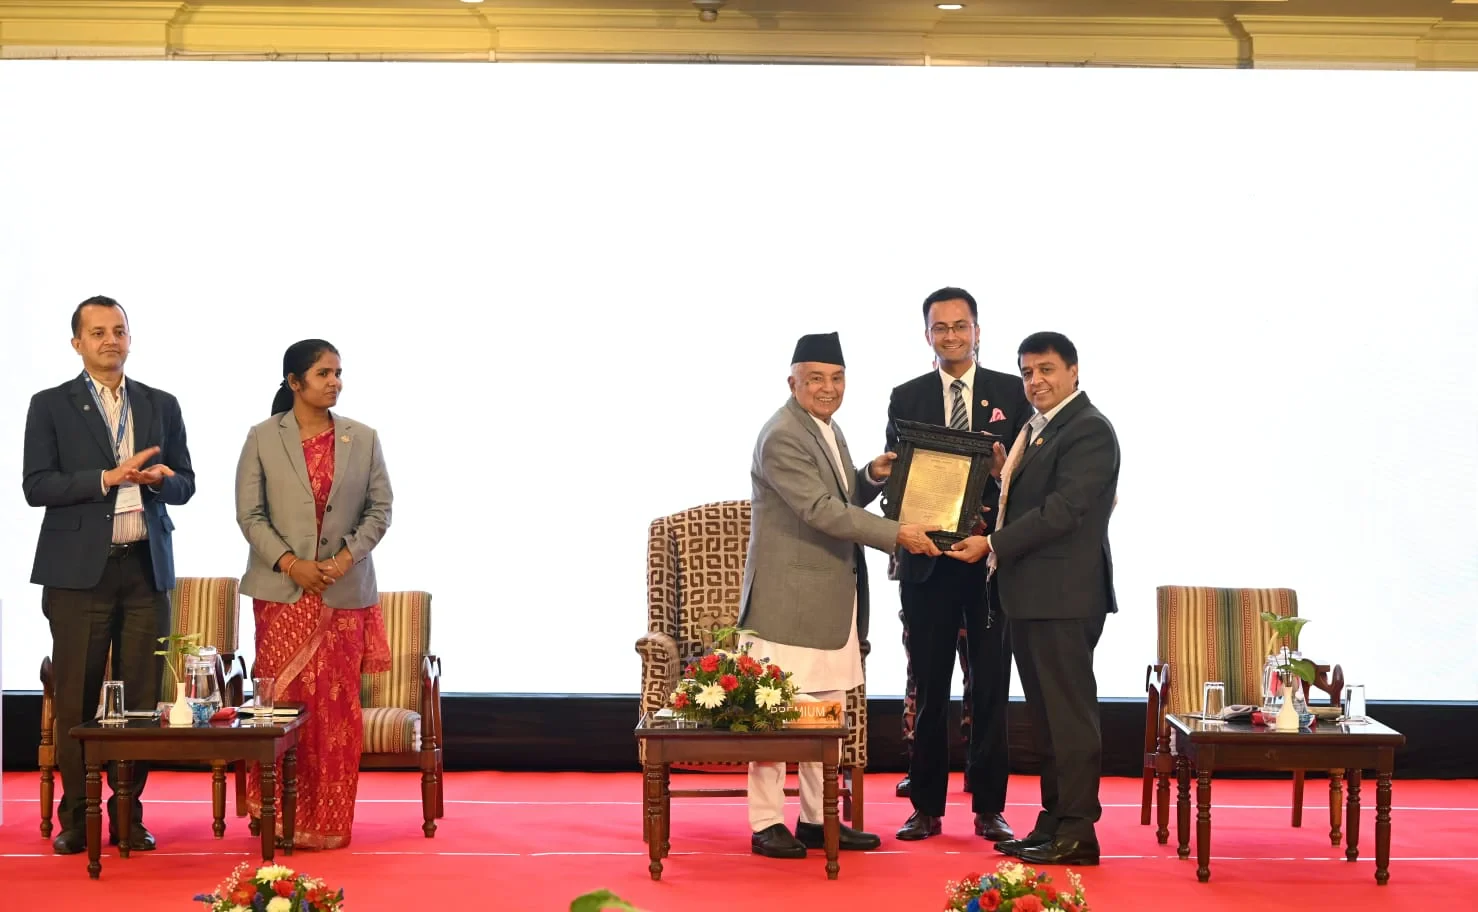 नेपाल उद्योग वाणिज्य महासंघका अध्यक्ष कर्पोरेट एक्सिलेन्सी अवार्डद्वारा सम्मानित